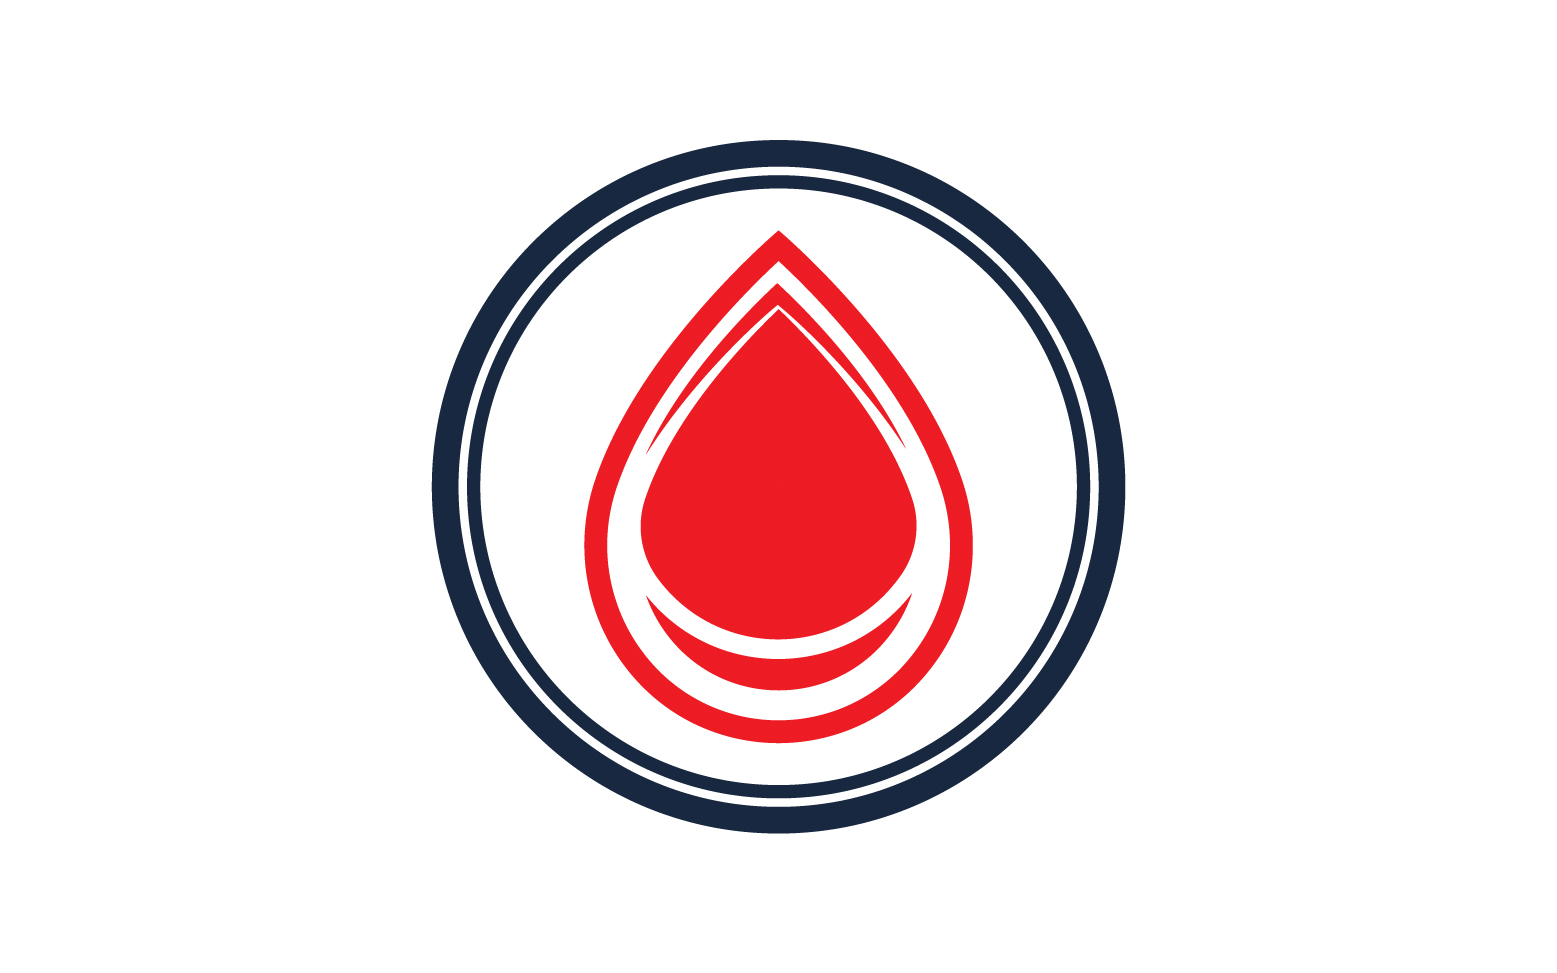 Blood drop icon logo template version v11